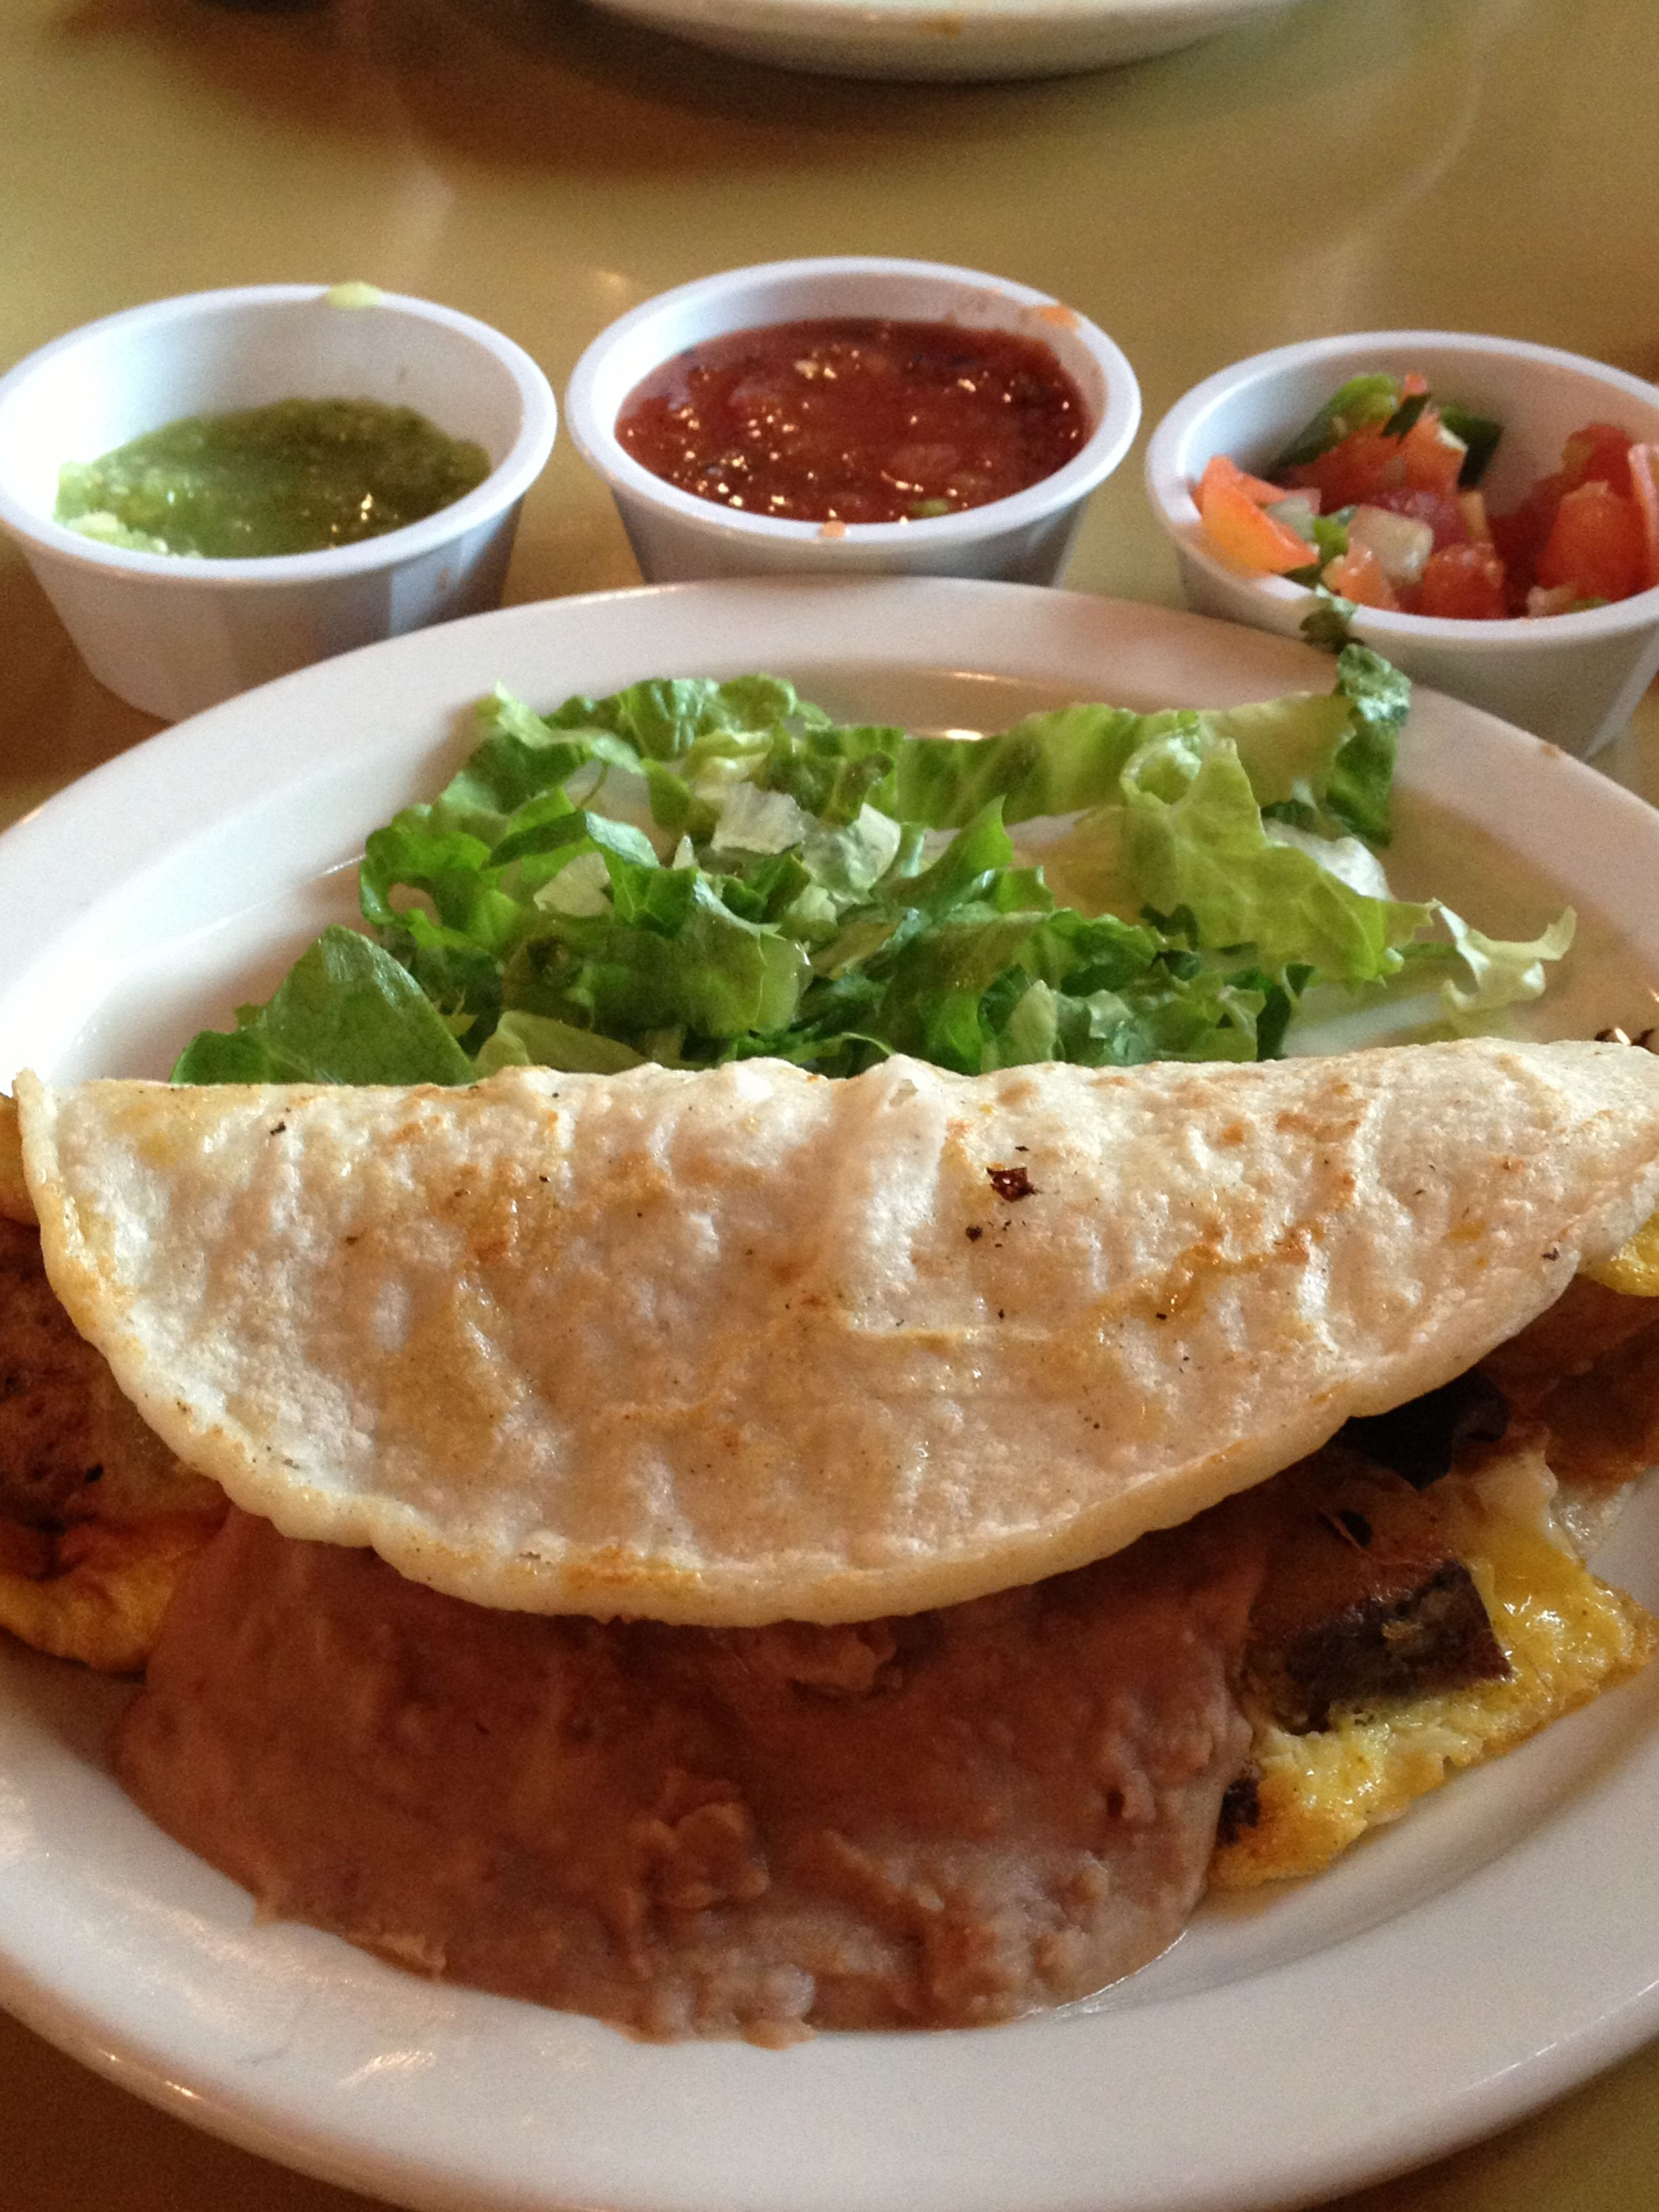 Healthy Breakfast Austin
 breakfast taco at guero s in austin texas